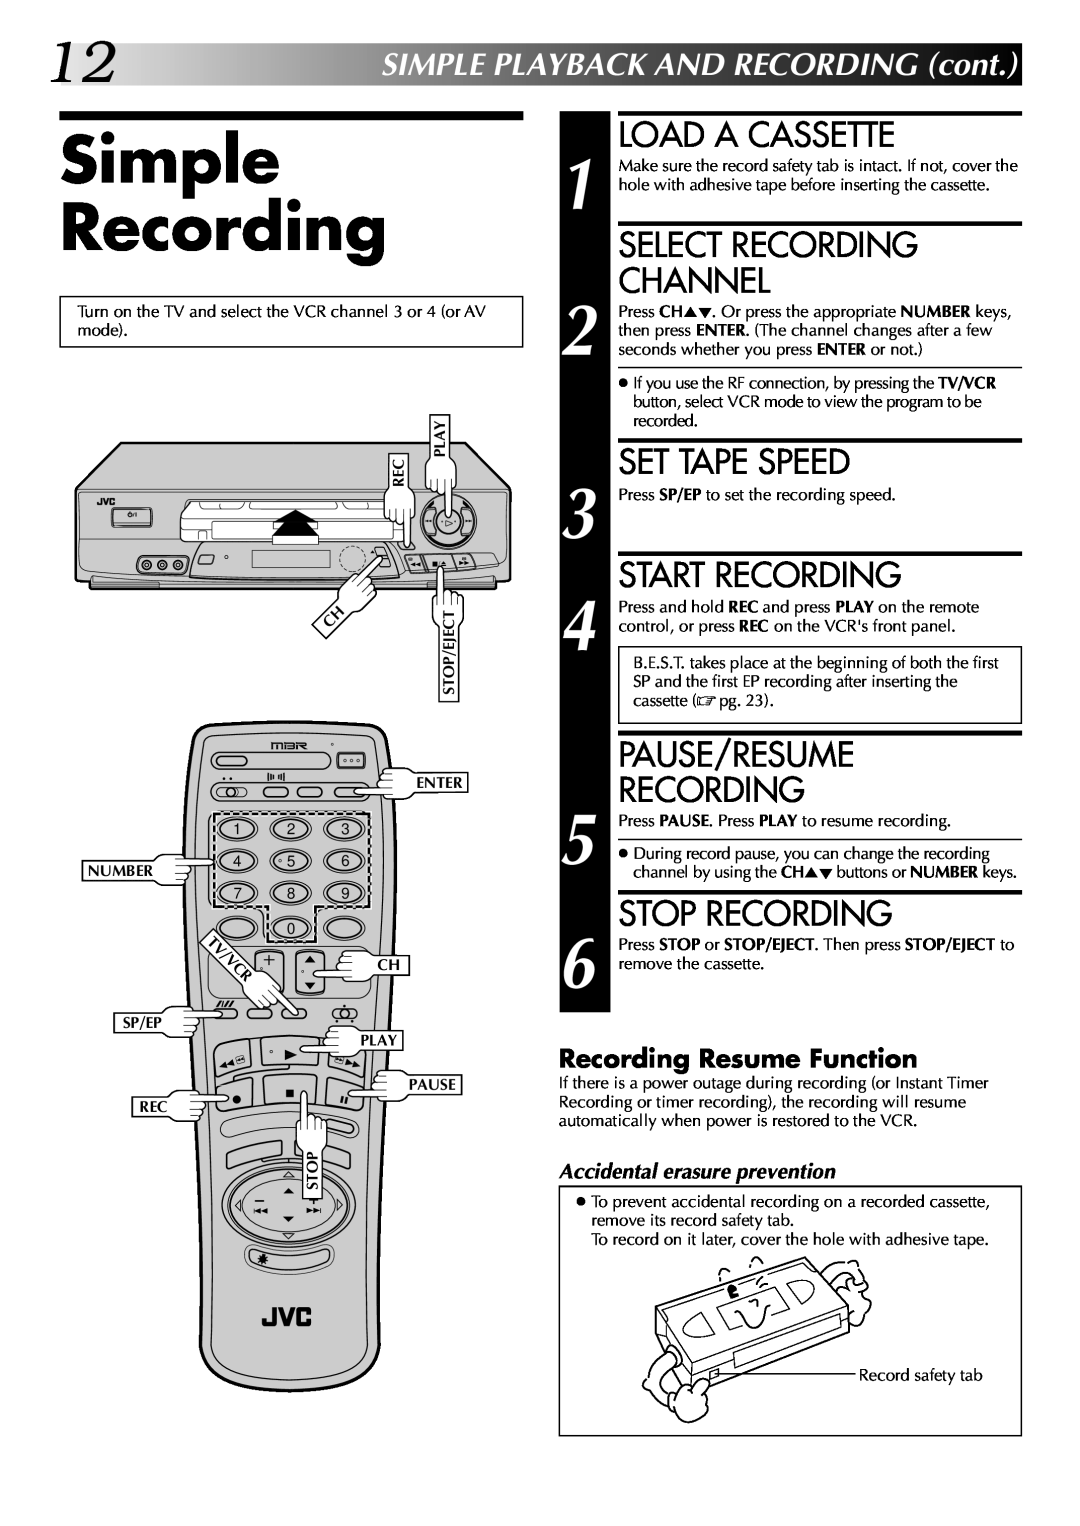 JVC HR-J7004UM manual Simple Recording, Select Recording Channel, Set Tape Speed, Start Recording, Pause/Resume Recording 